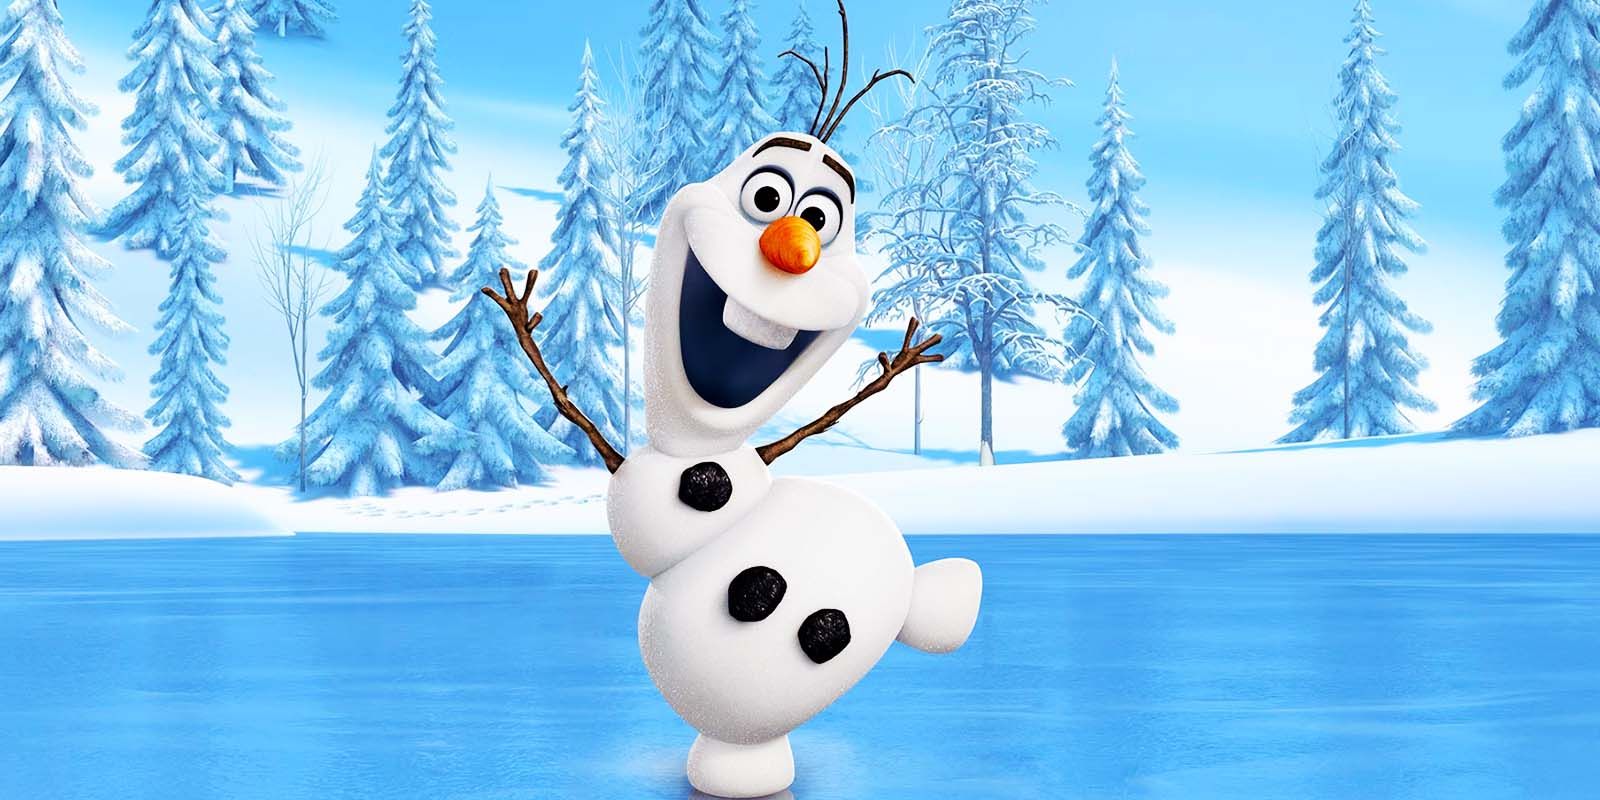 Olaf di Frozen tahun 2013